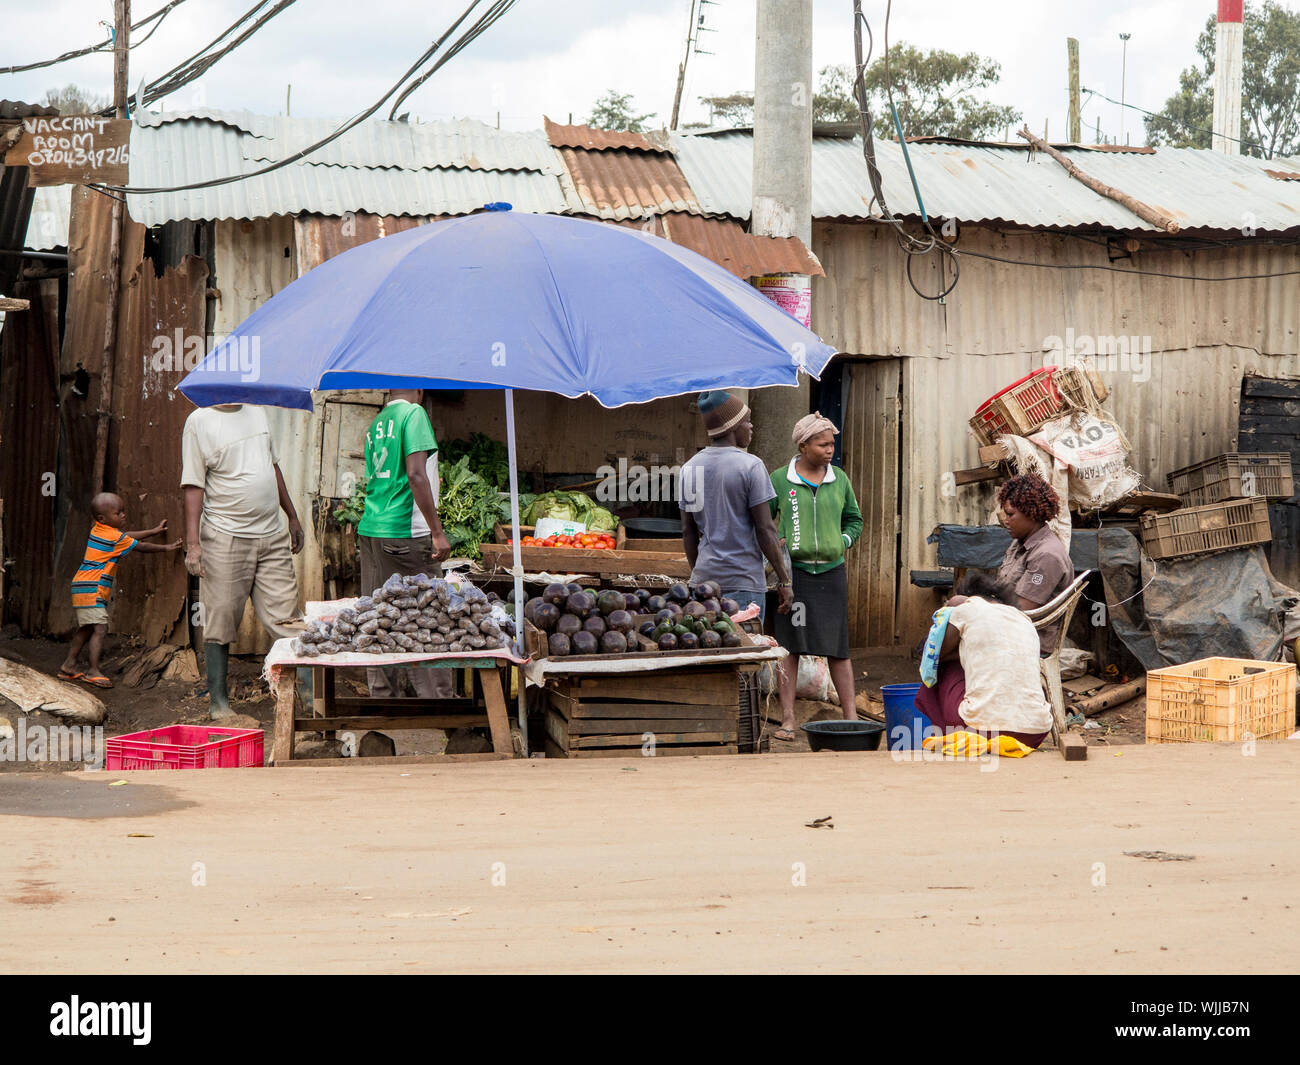 KIBERA, KENYA-NOVEMBER 6, 2015: Unidentified people work at a vegetable stand in Kibera, the largest urban slum in Africa. Stock Photo